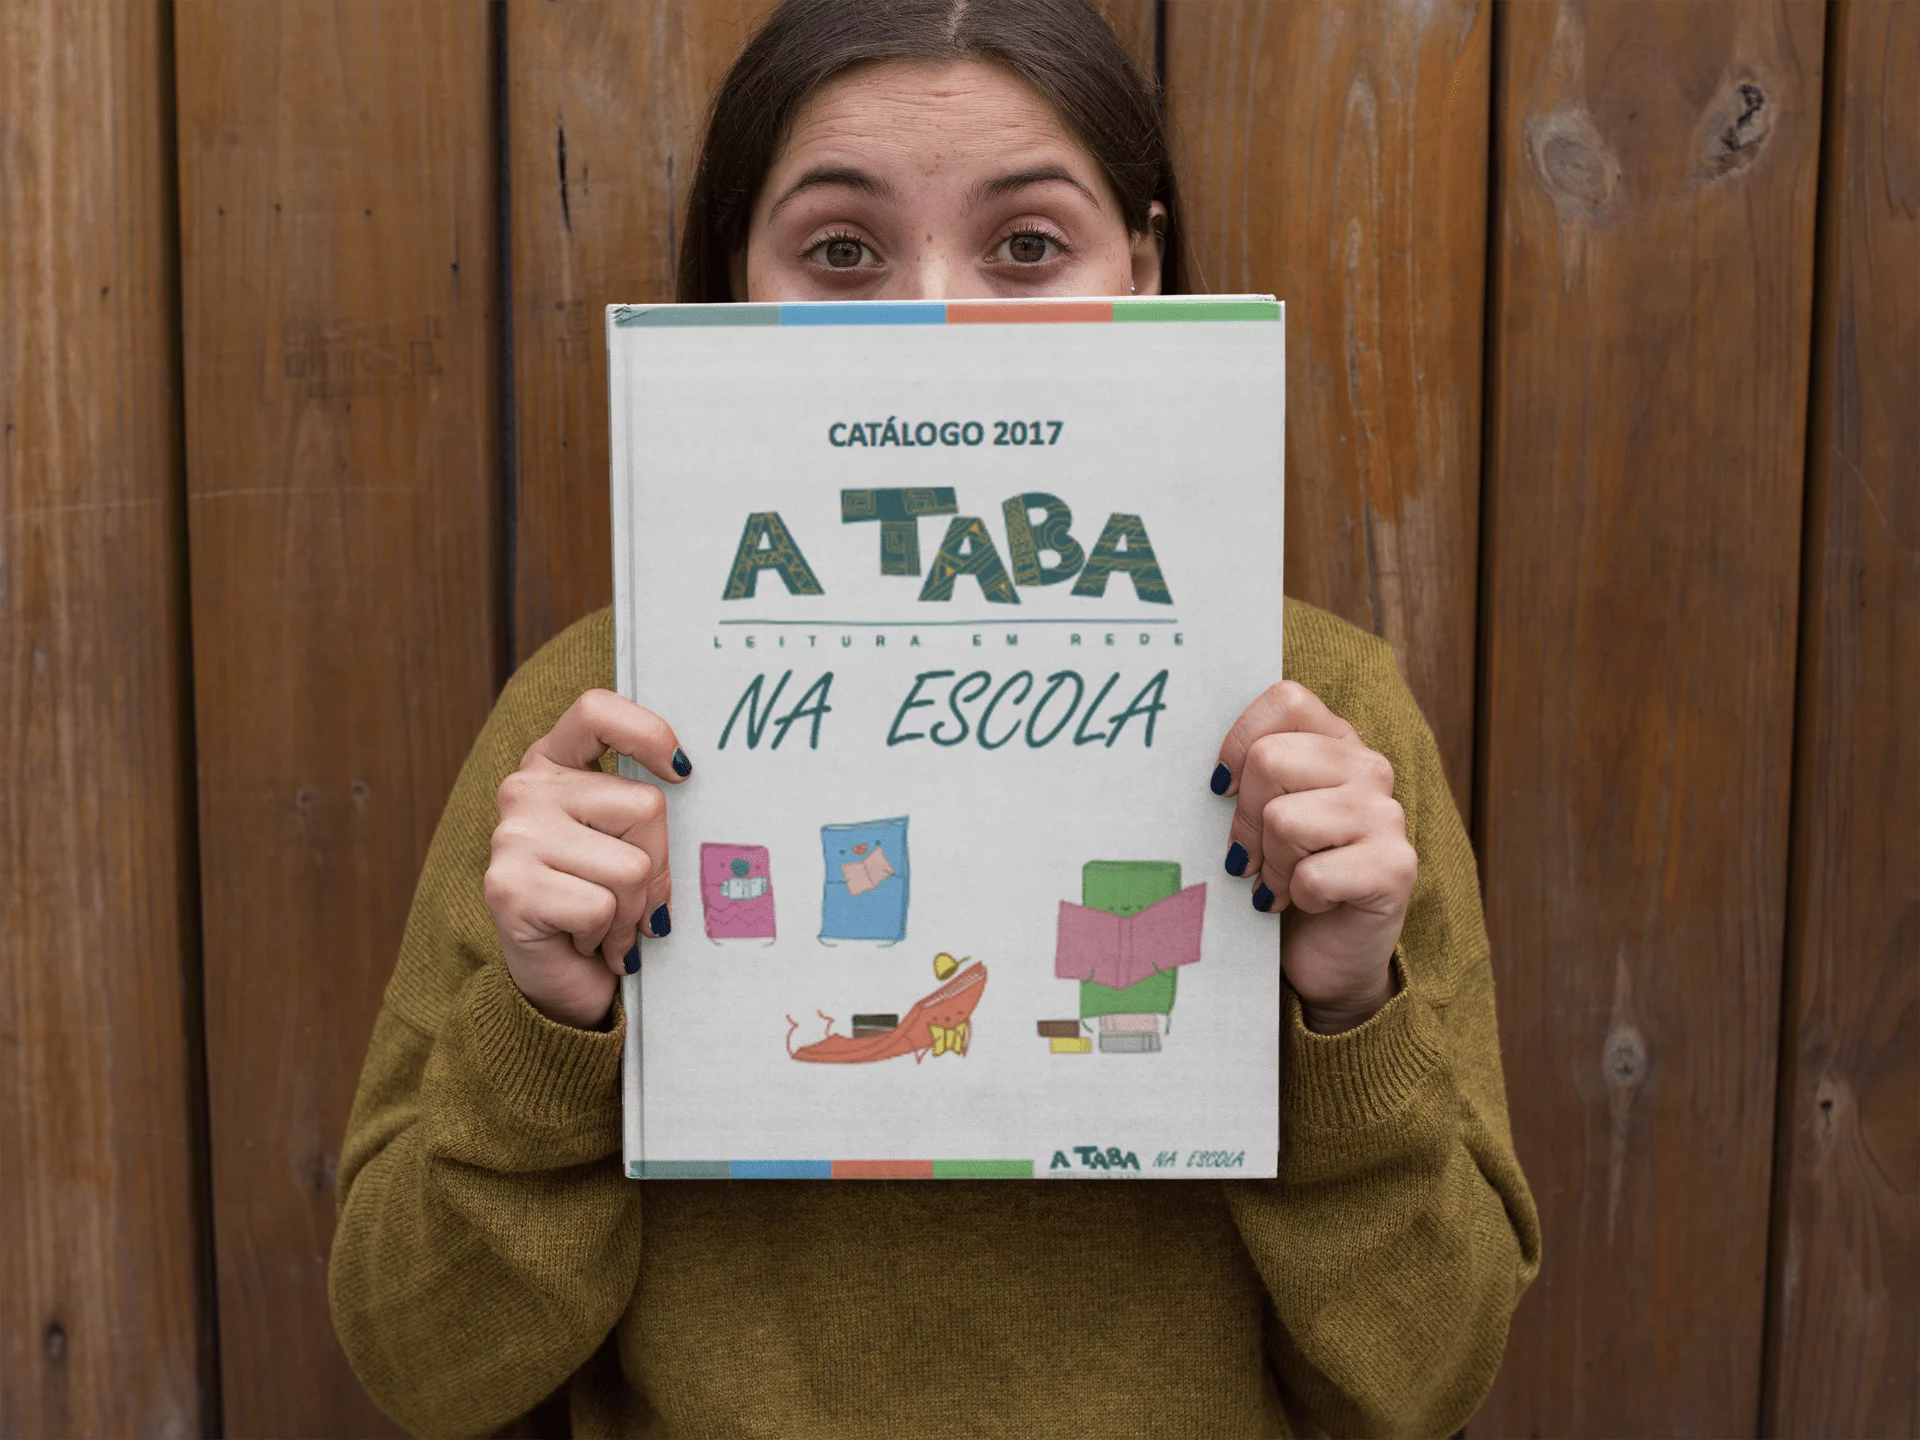 Catálogo A Taba na Escola 2017 – Baixe grátis!